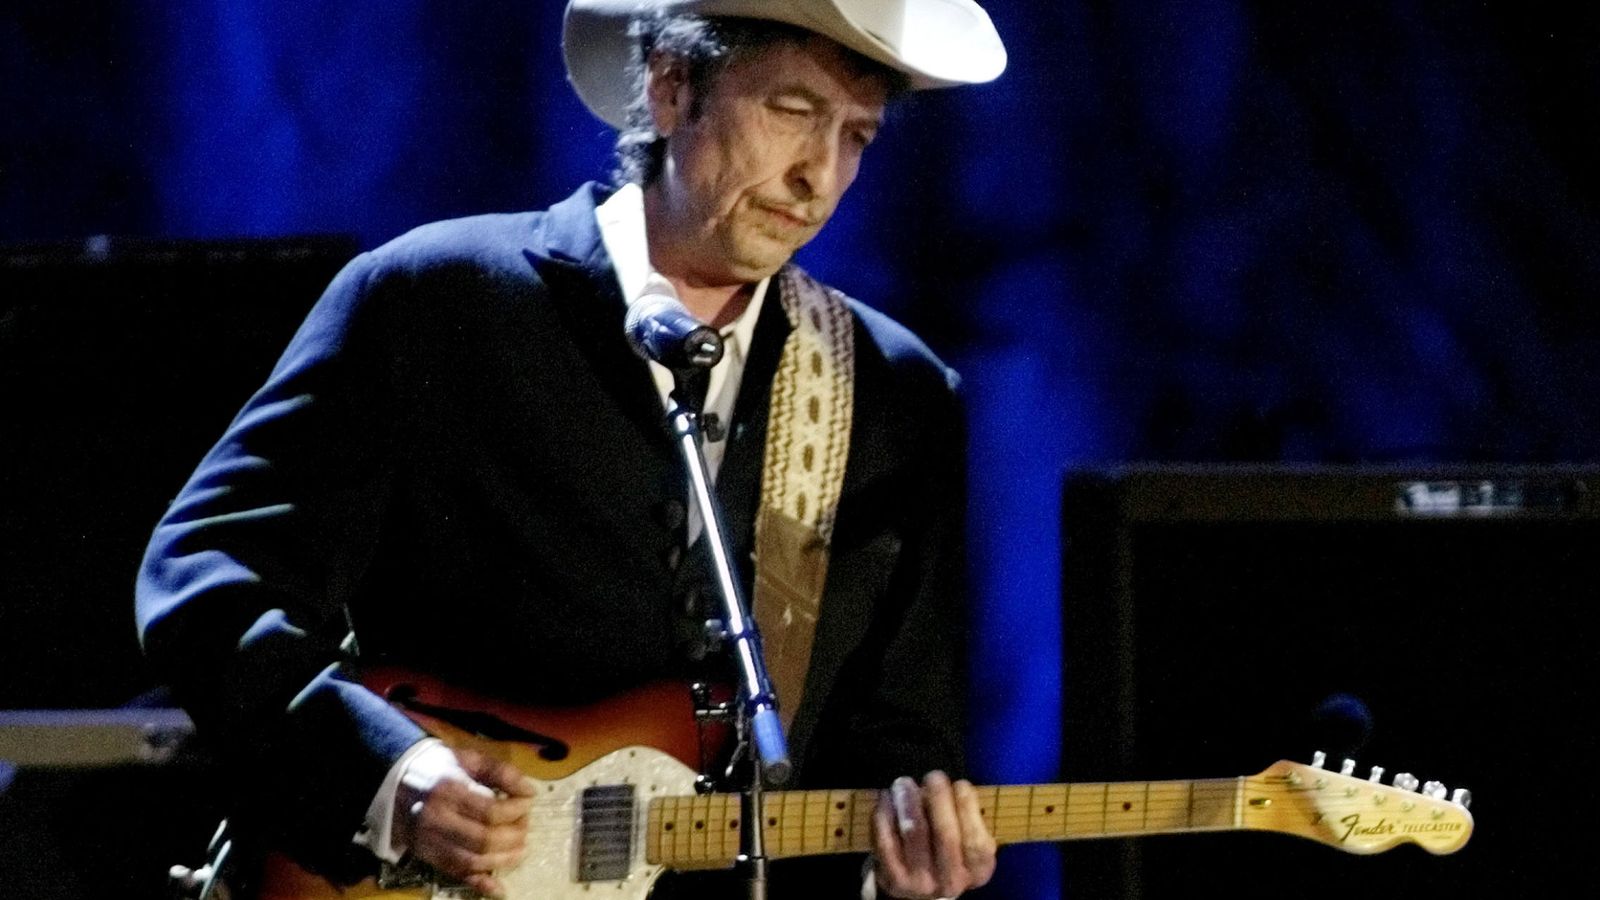 Foto: El cantante Bob Dylan recibe el premio Nobel de Literatura 2016 (REUTERS)